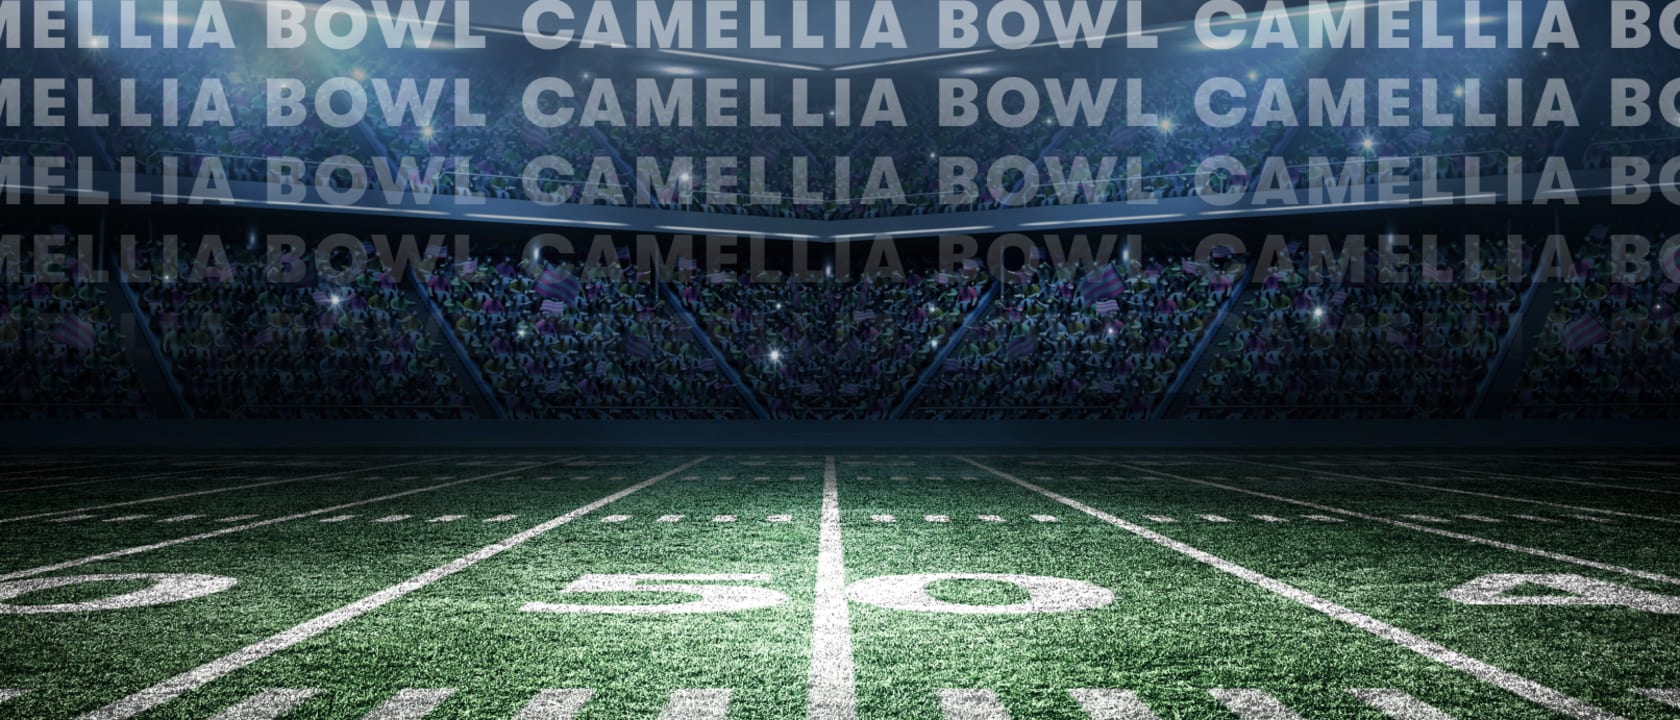 Camellia Bowl